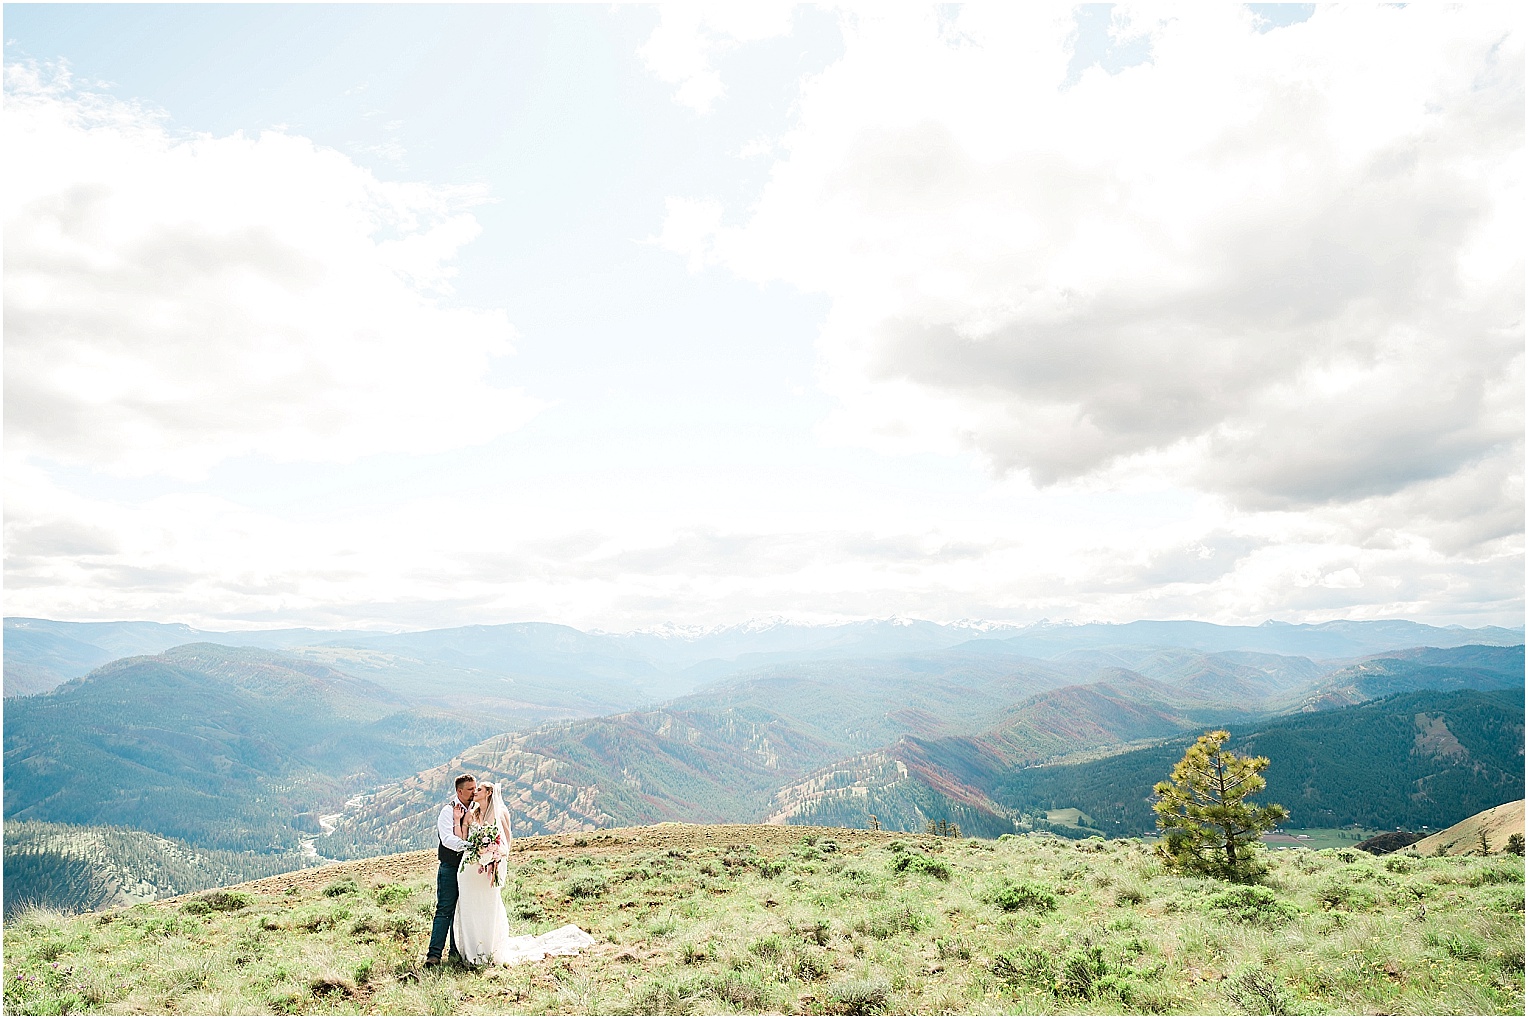 Beautiful Elk Ridge Wedding Naches Photographer Cory and Jenna bride and groom on a mountain